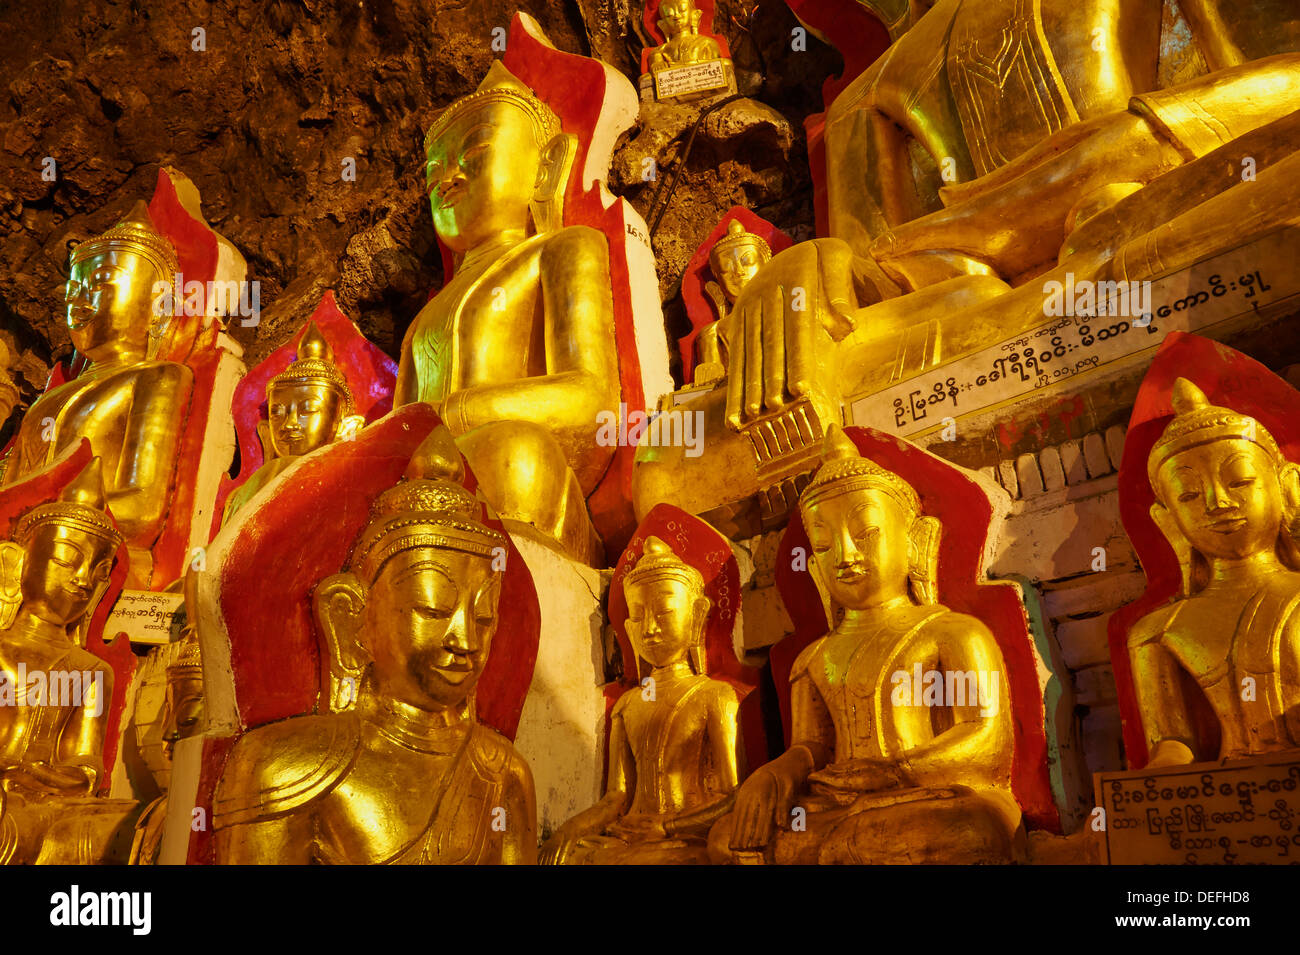 Statues of the Buddha, Shwe Oo Min natural Buddhist cave pagoda, Pindaya, Shan State, Myanmar (Burma), Asia Stock Photo